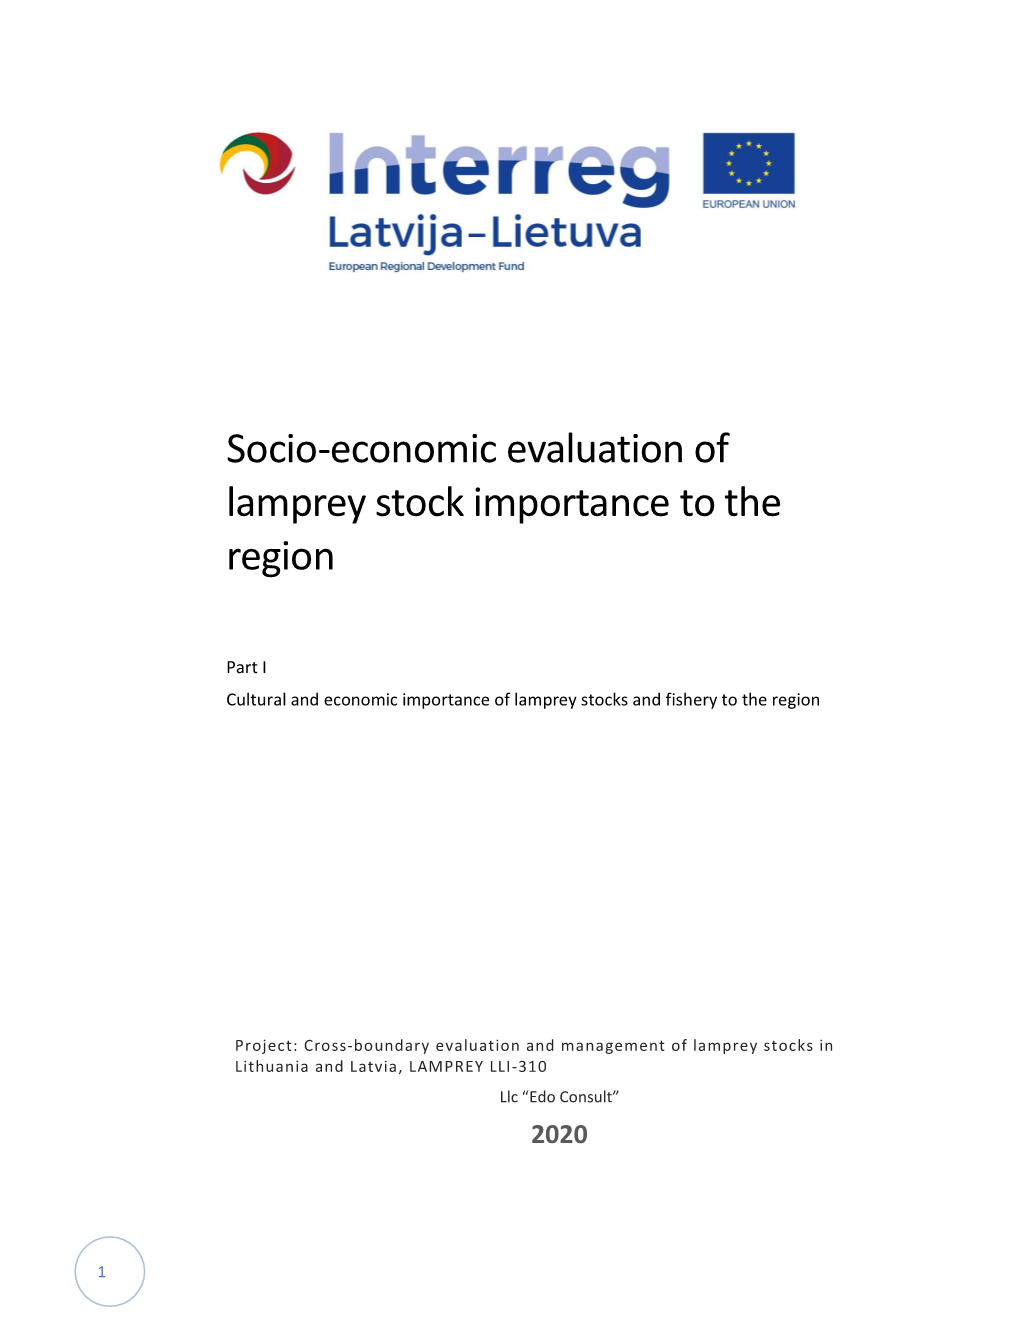 Socio-Economic Evaluation of Lamprey Stock Importance to the Region